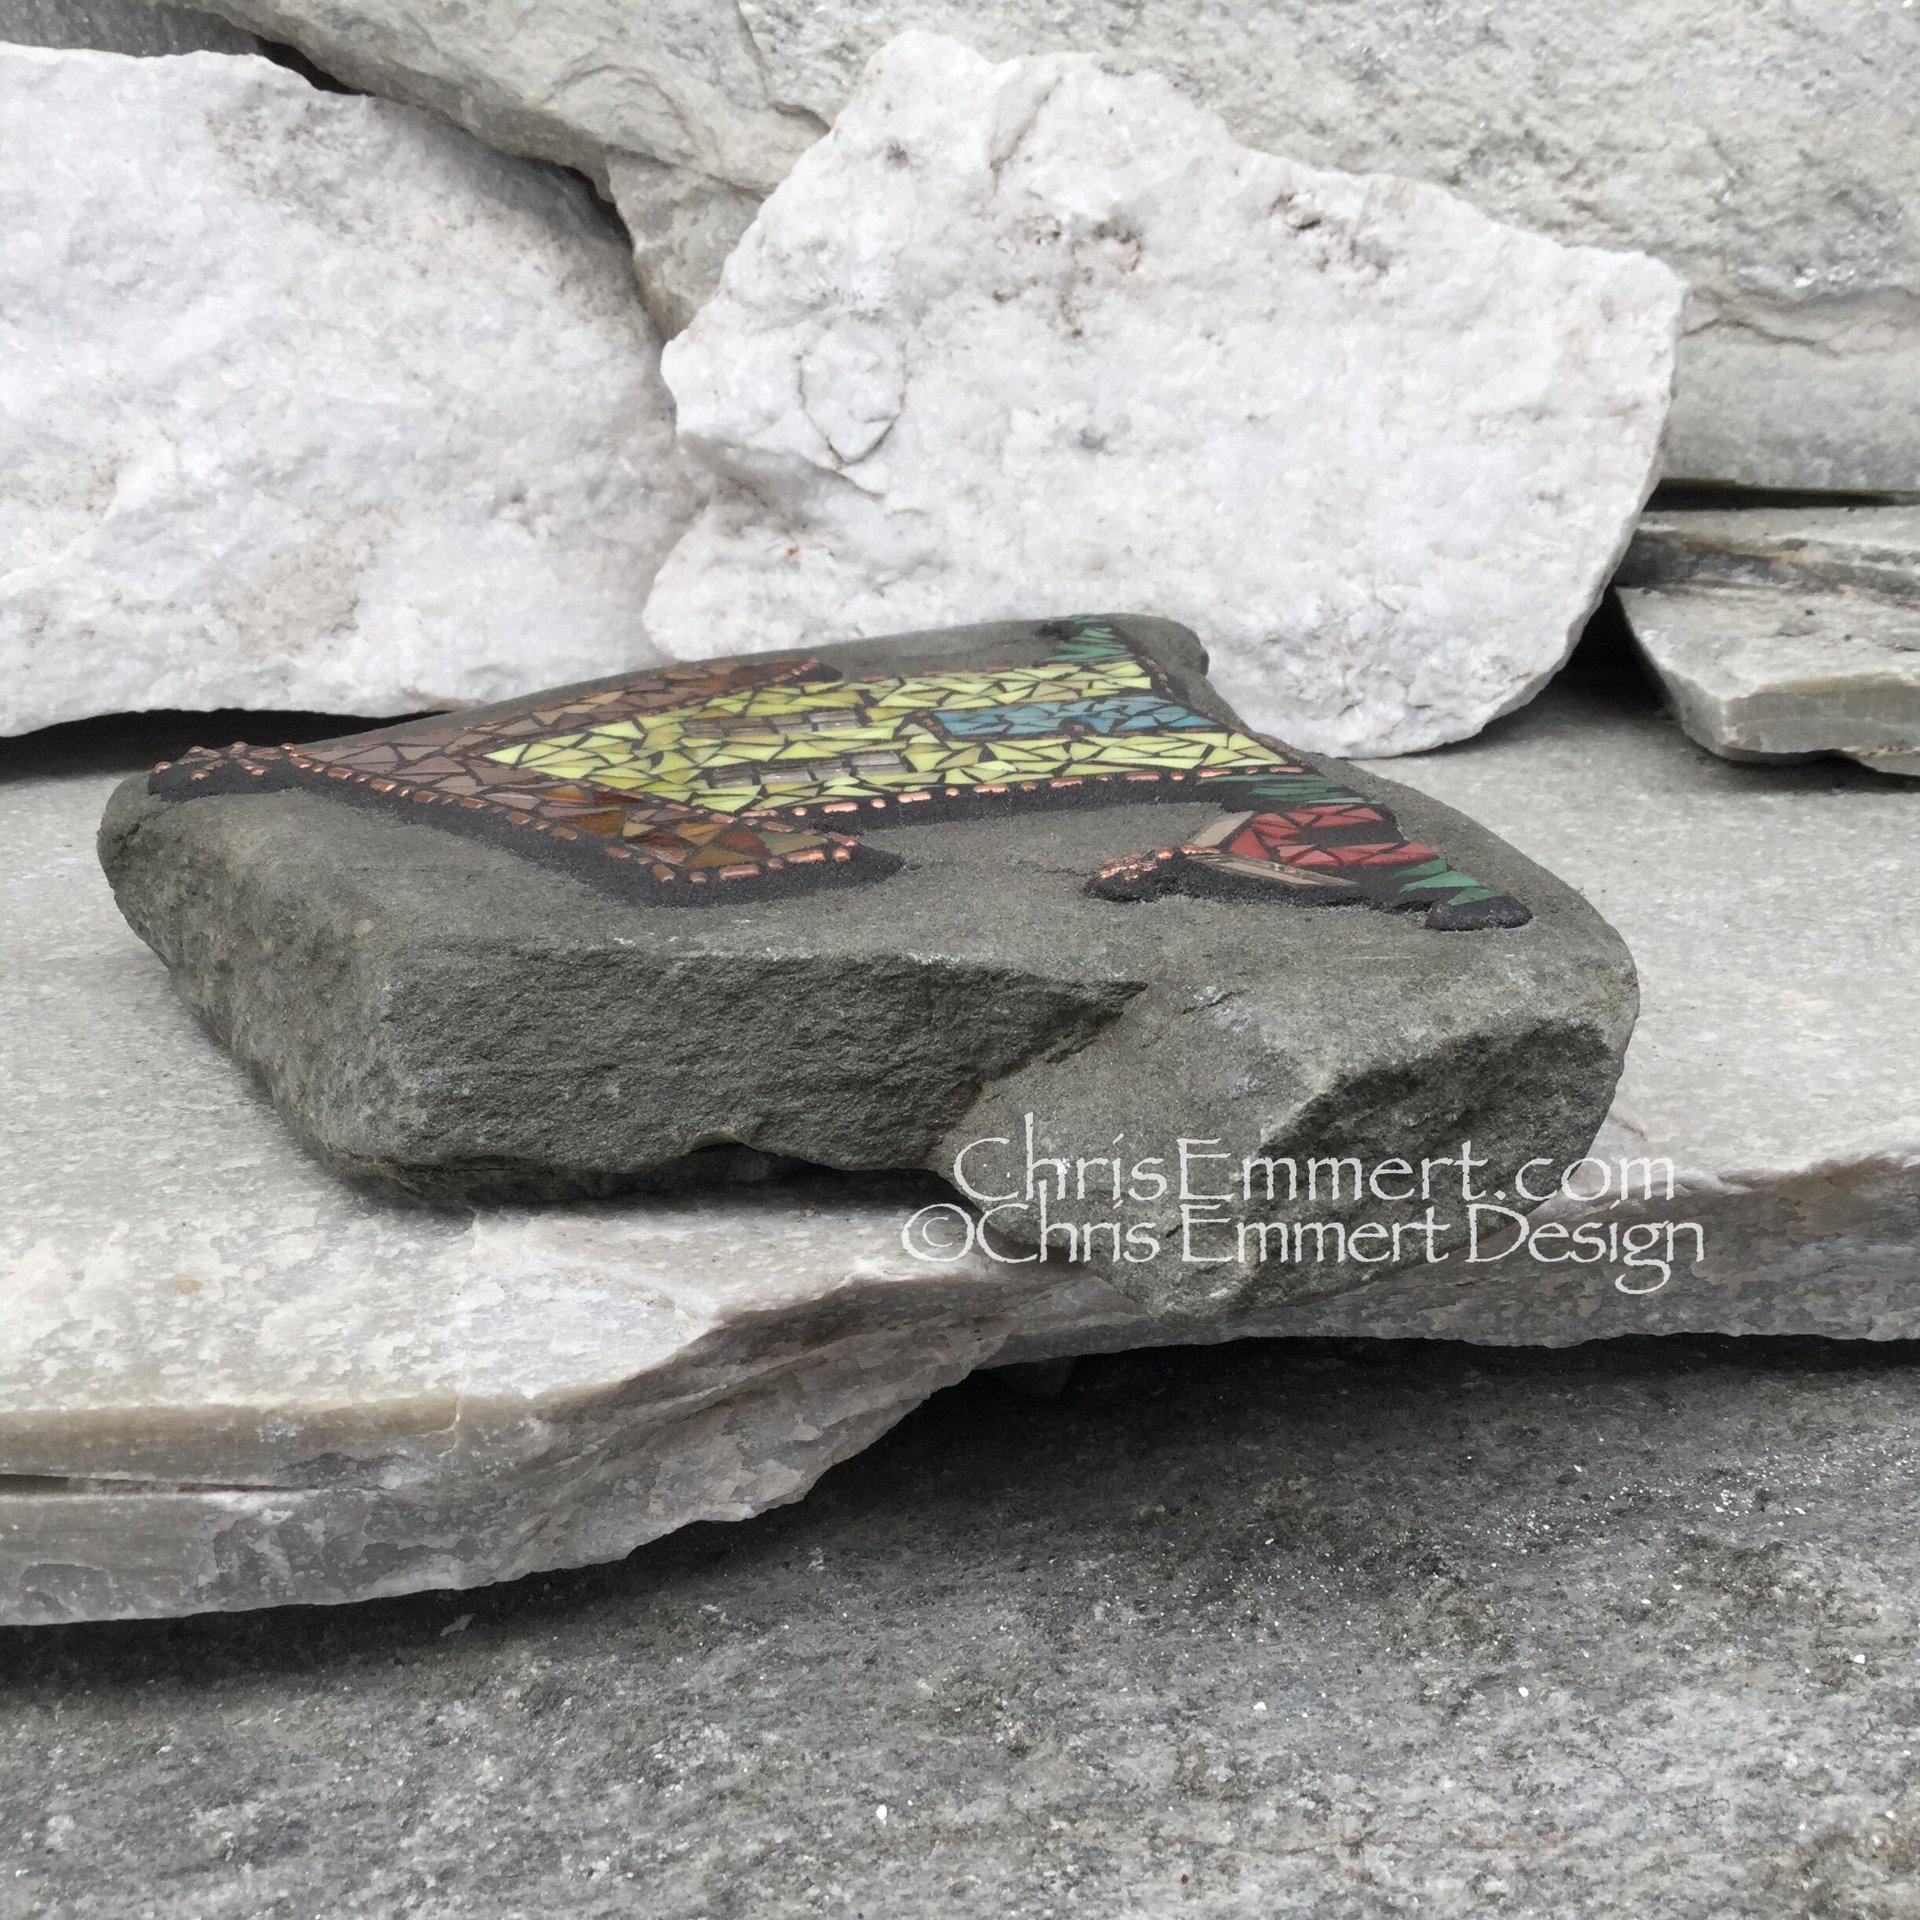 Crooked House Mosaic Rock, Gardener Gift, Home Decor, Mosaic Garden Stone